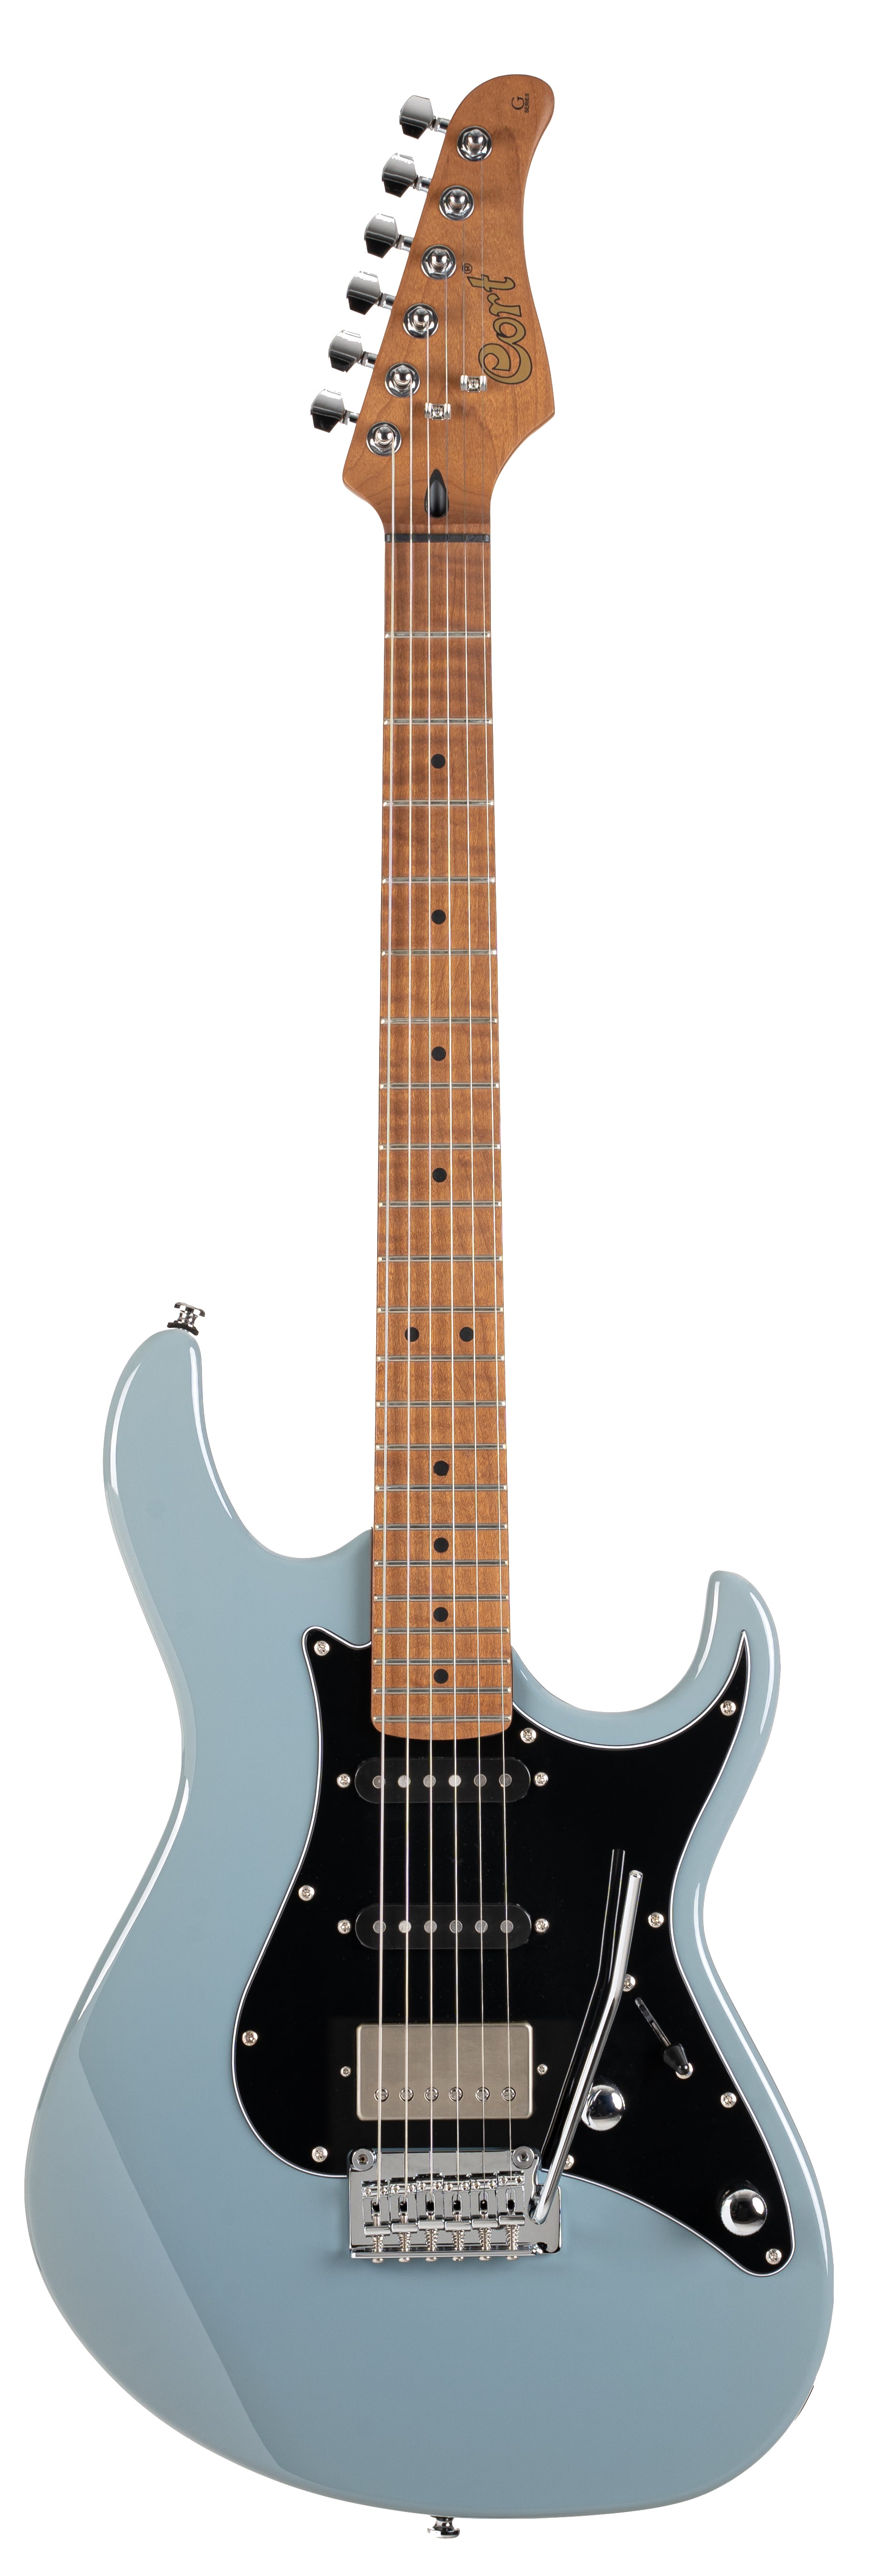 Cort G250 SE Ocean Blue Grey, Electric Guitar for sale at Richards Guitars.